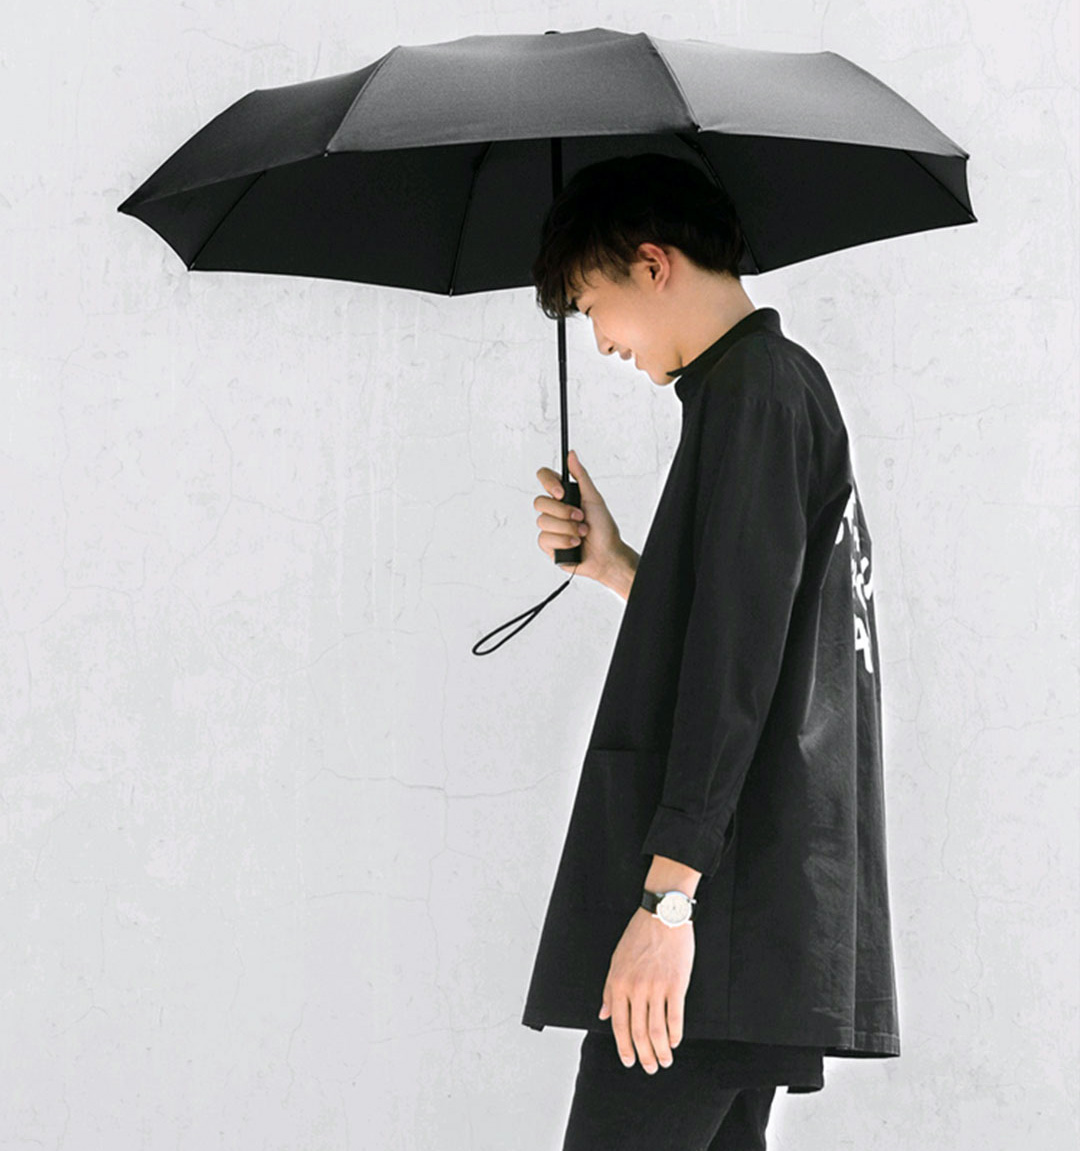 Xiaomi Mi Automatic Foldable Umbrella